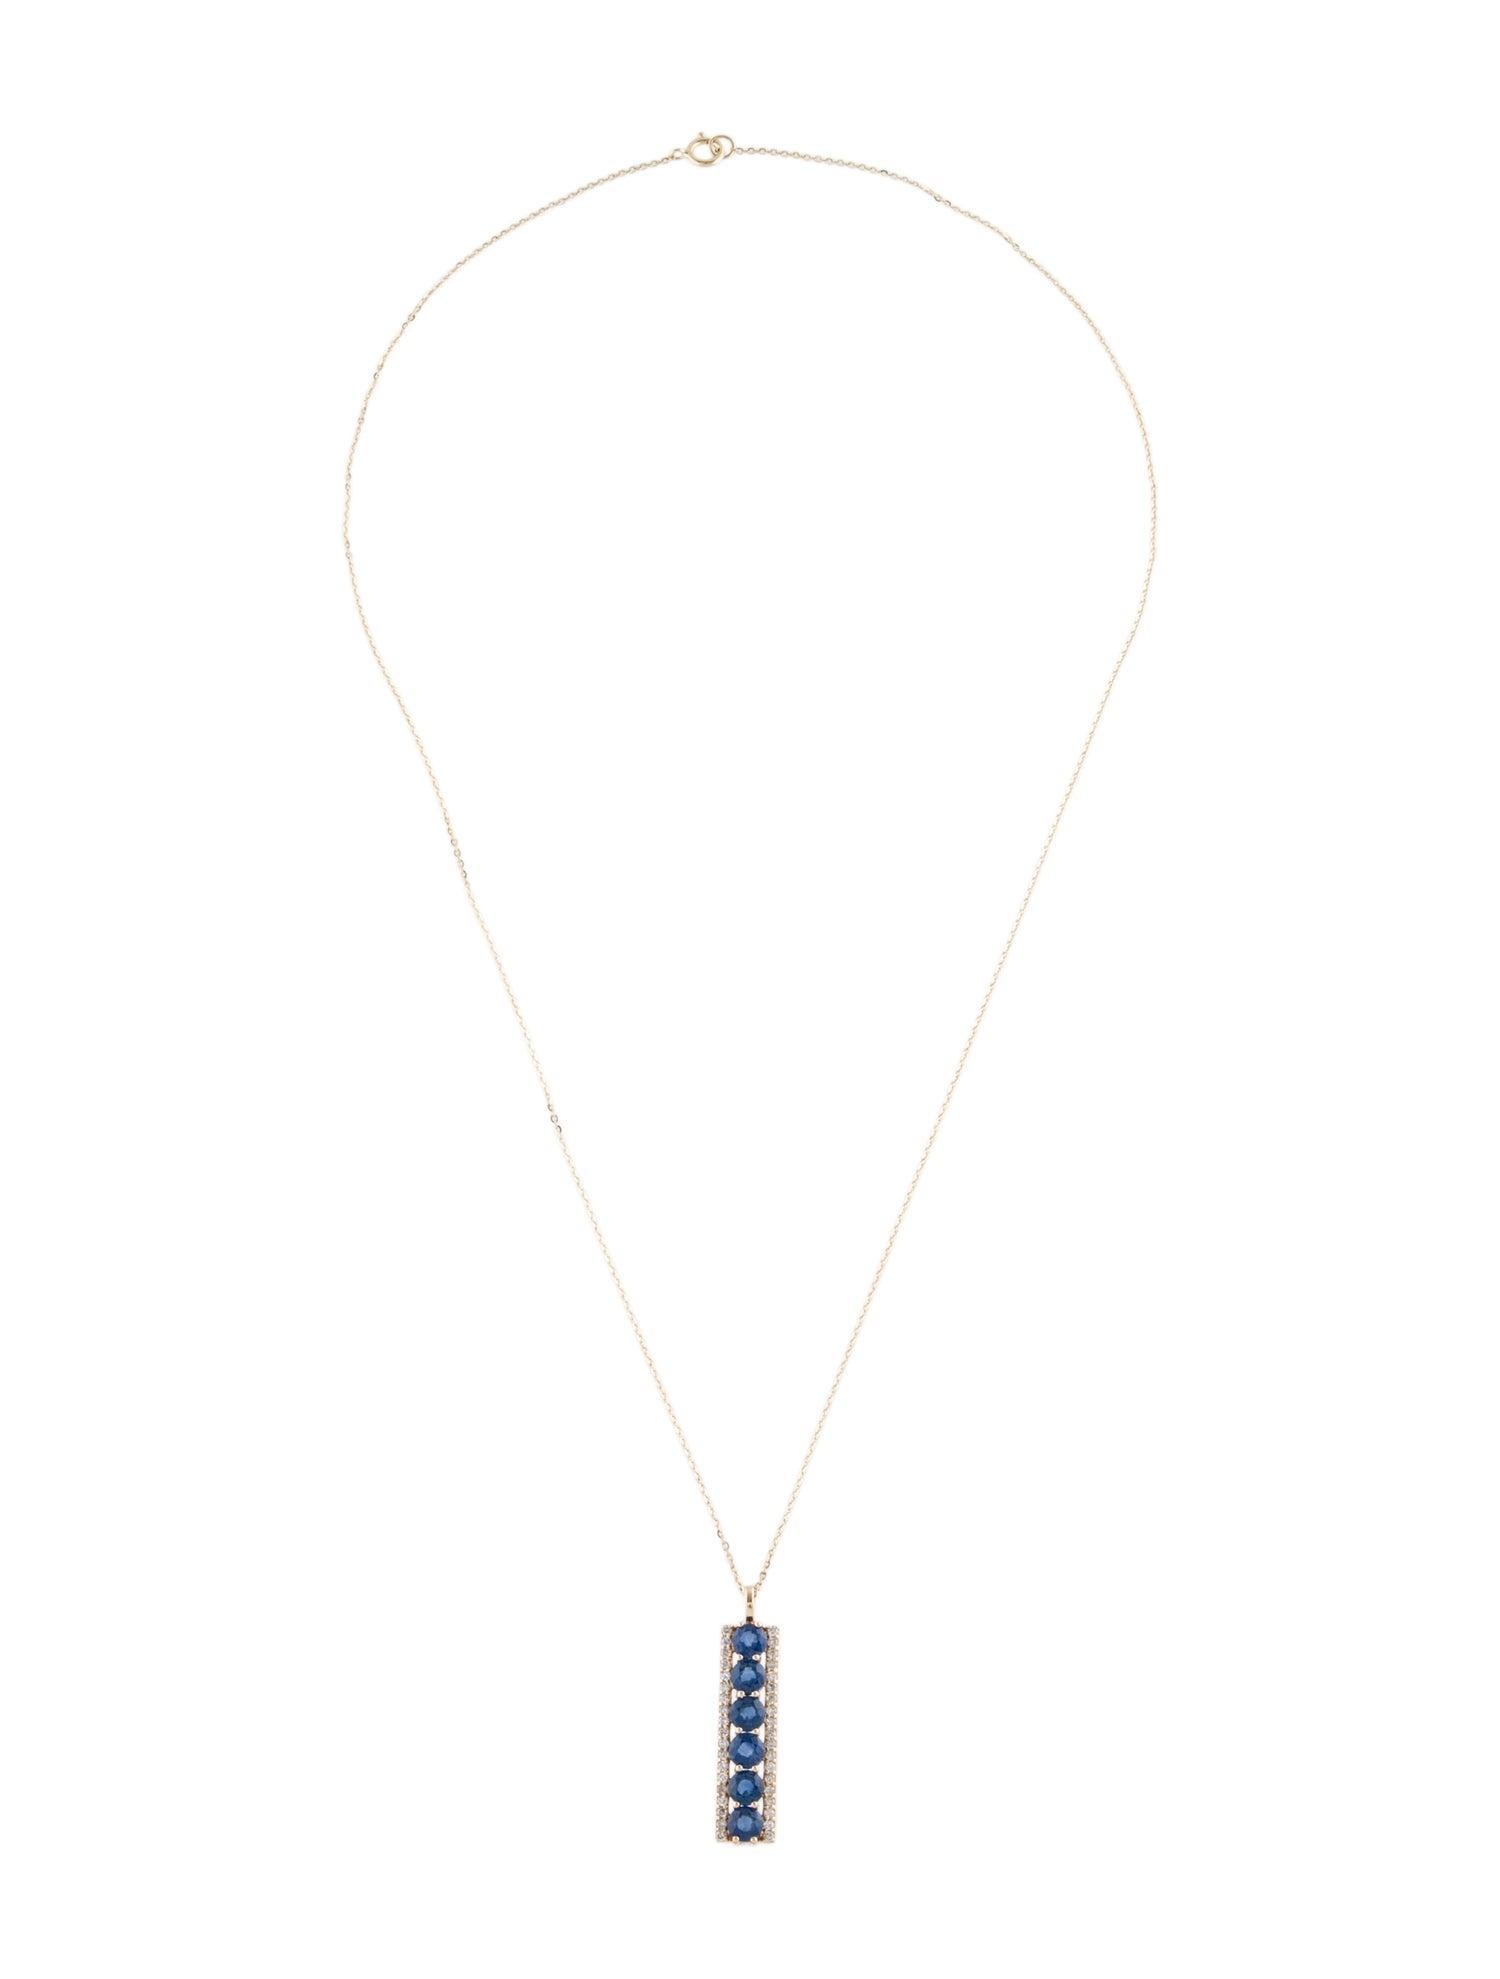 Brilliant Cut Elegant 14K Sapphire & Diamond Pendant Necklace  1.98ctw Gemstone Sparkle For Sale